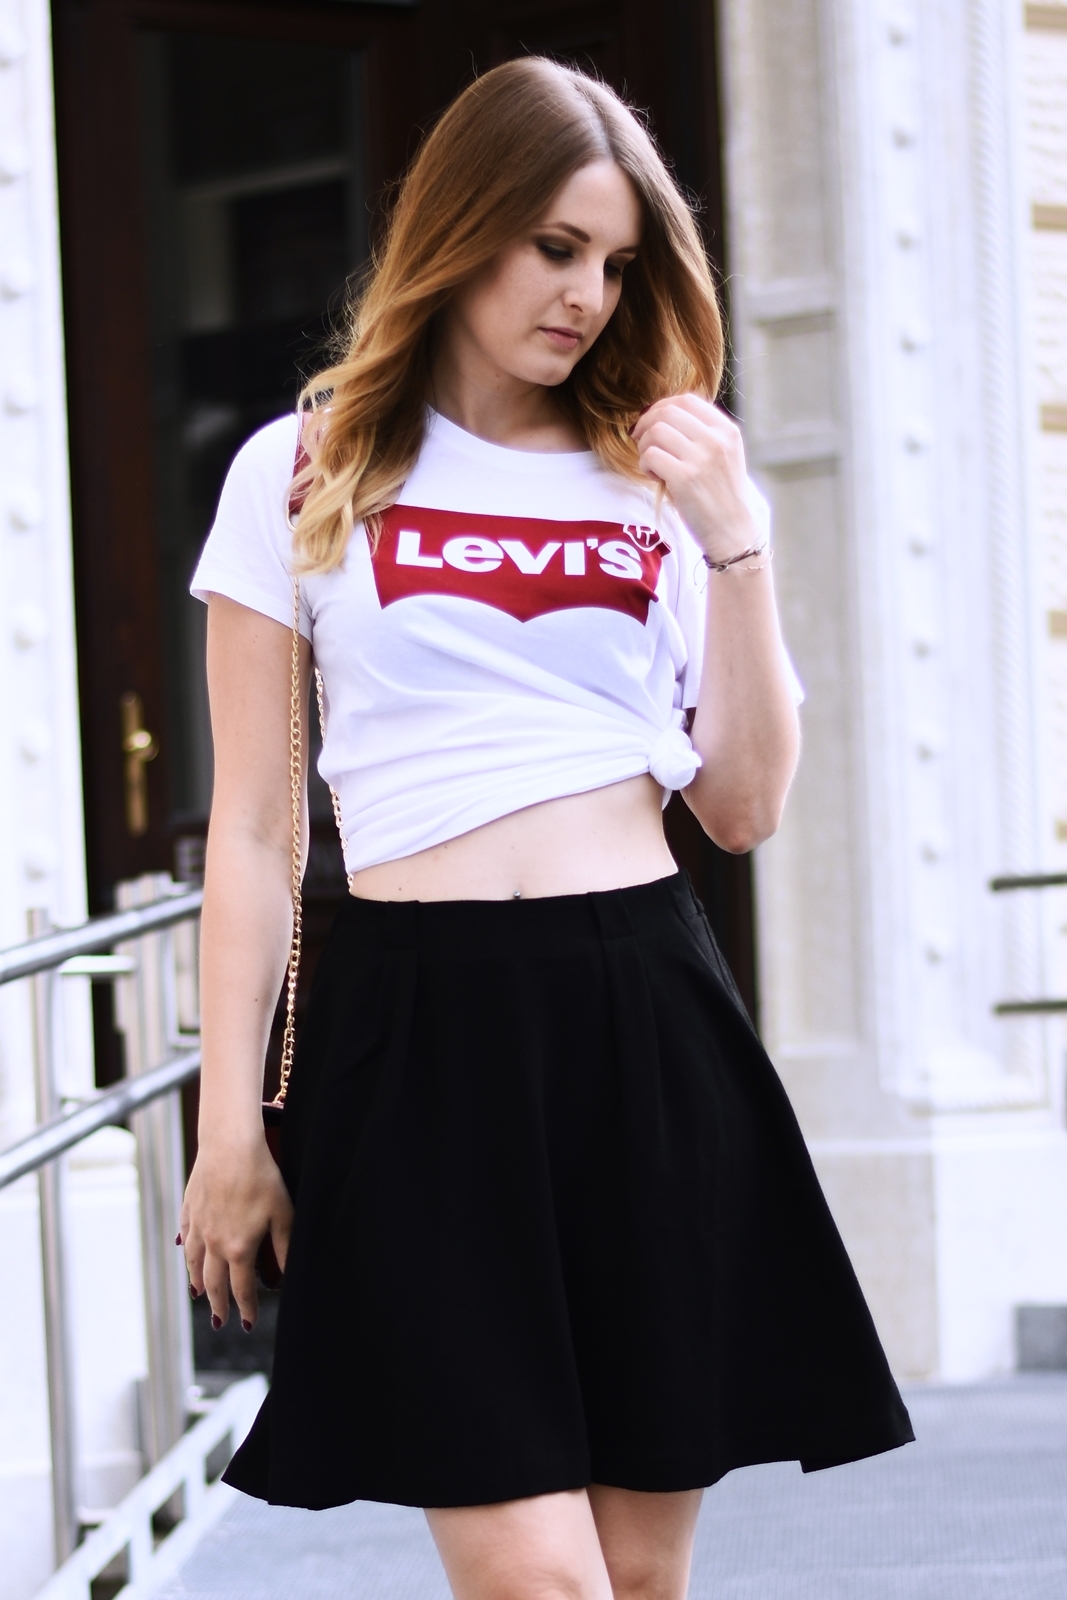 Brand Shirt kombinieren - so stylst du dieses Trend Teil - Levis - Statement - Love Bag - Basic - Rock - Converse - Fashionladyloves by Tamara Wagner Fashionblog